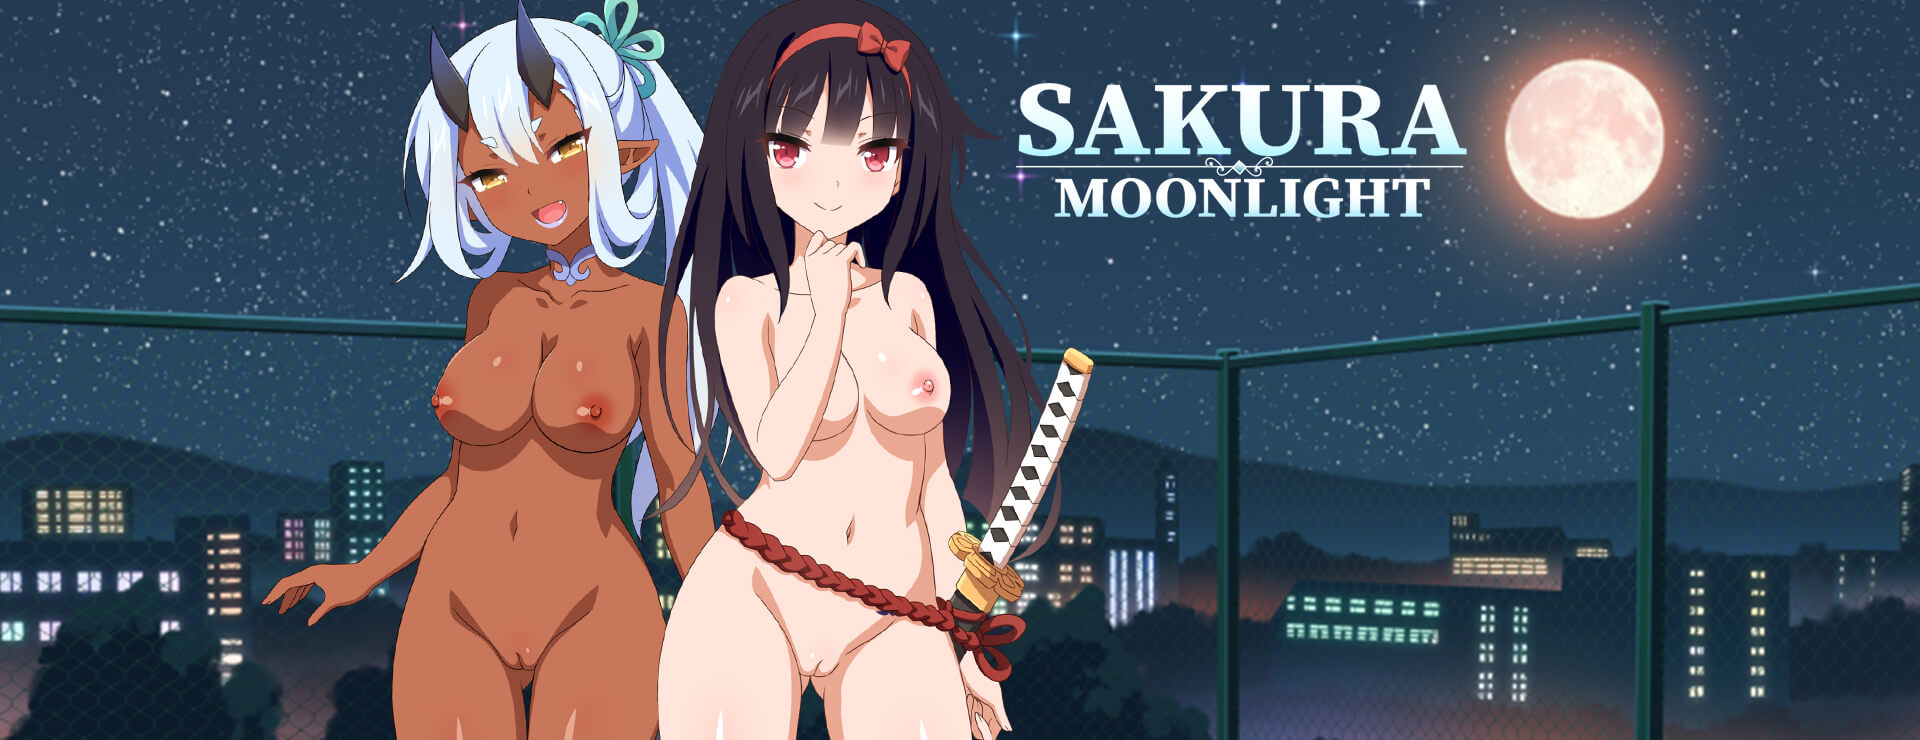 Sakura Moonlight - ビジュアルノベル ゲーム